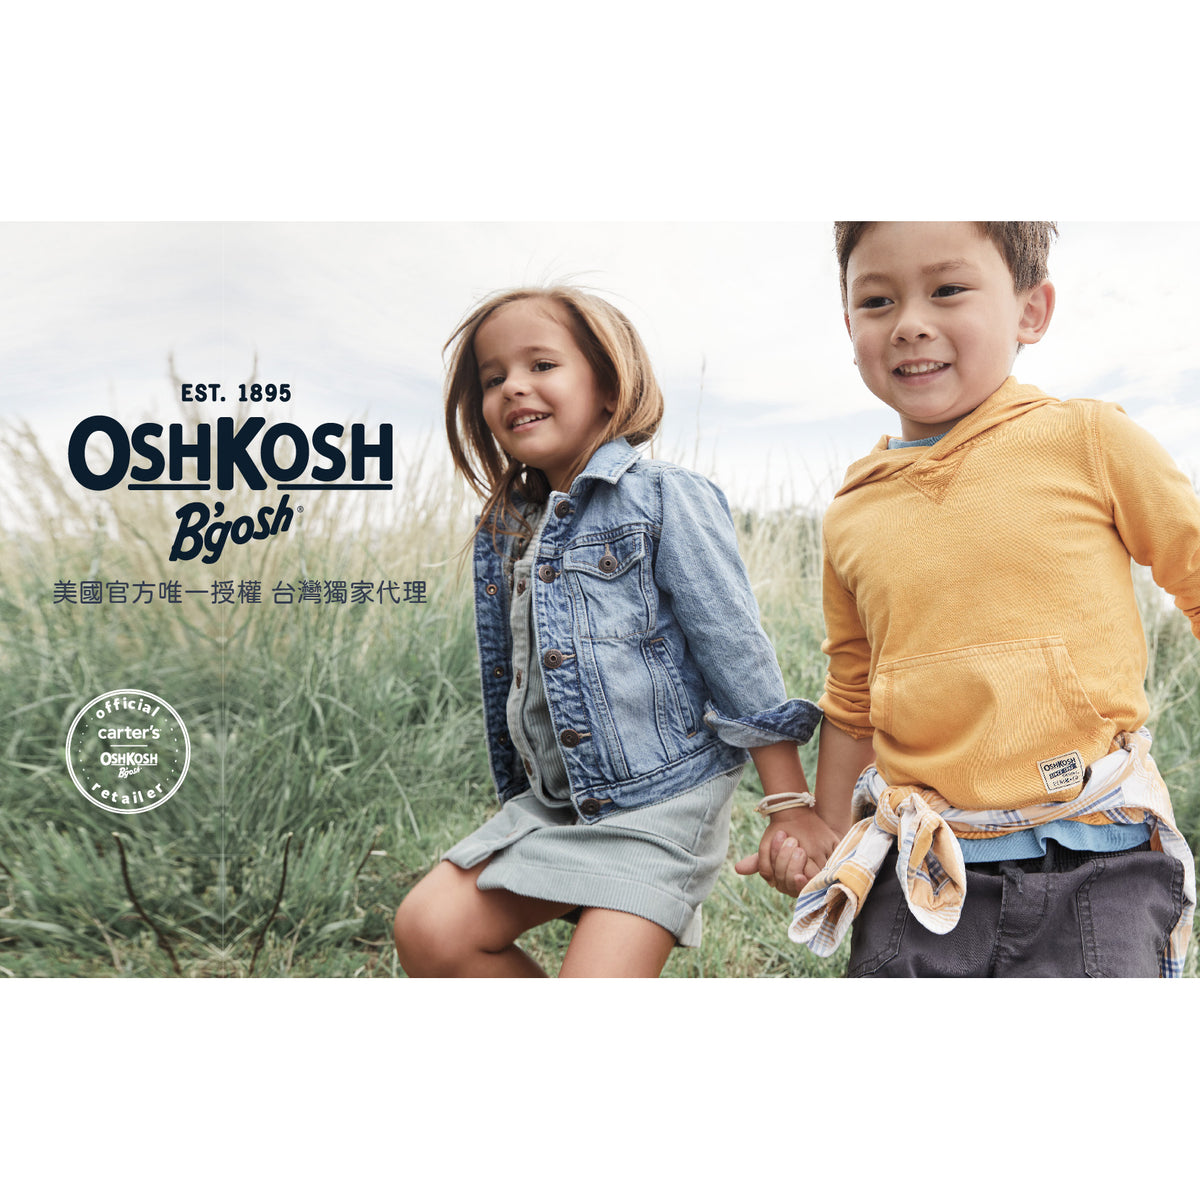 OshKosh gray green plain short-sleeved top (2T-5T)